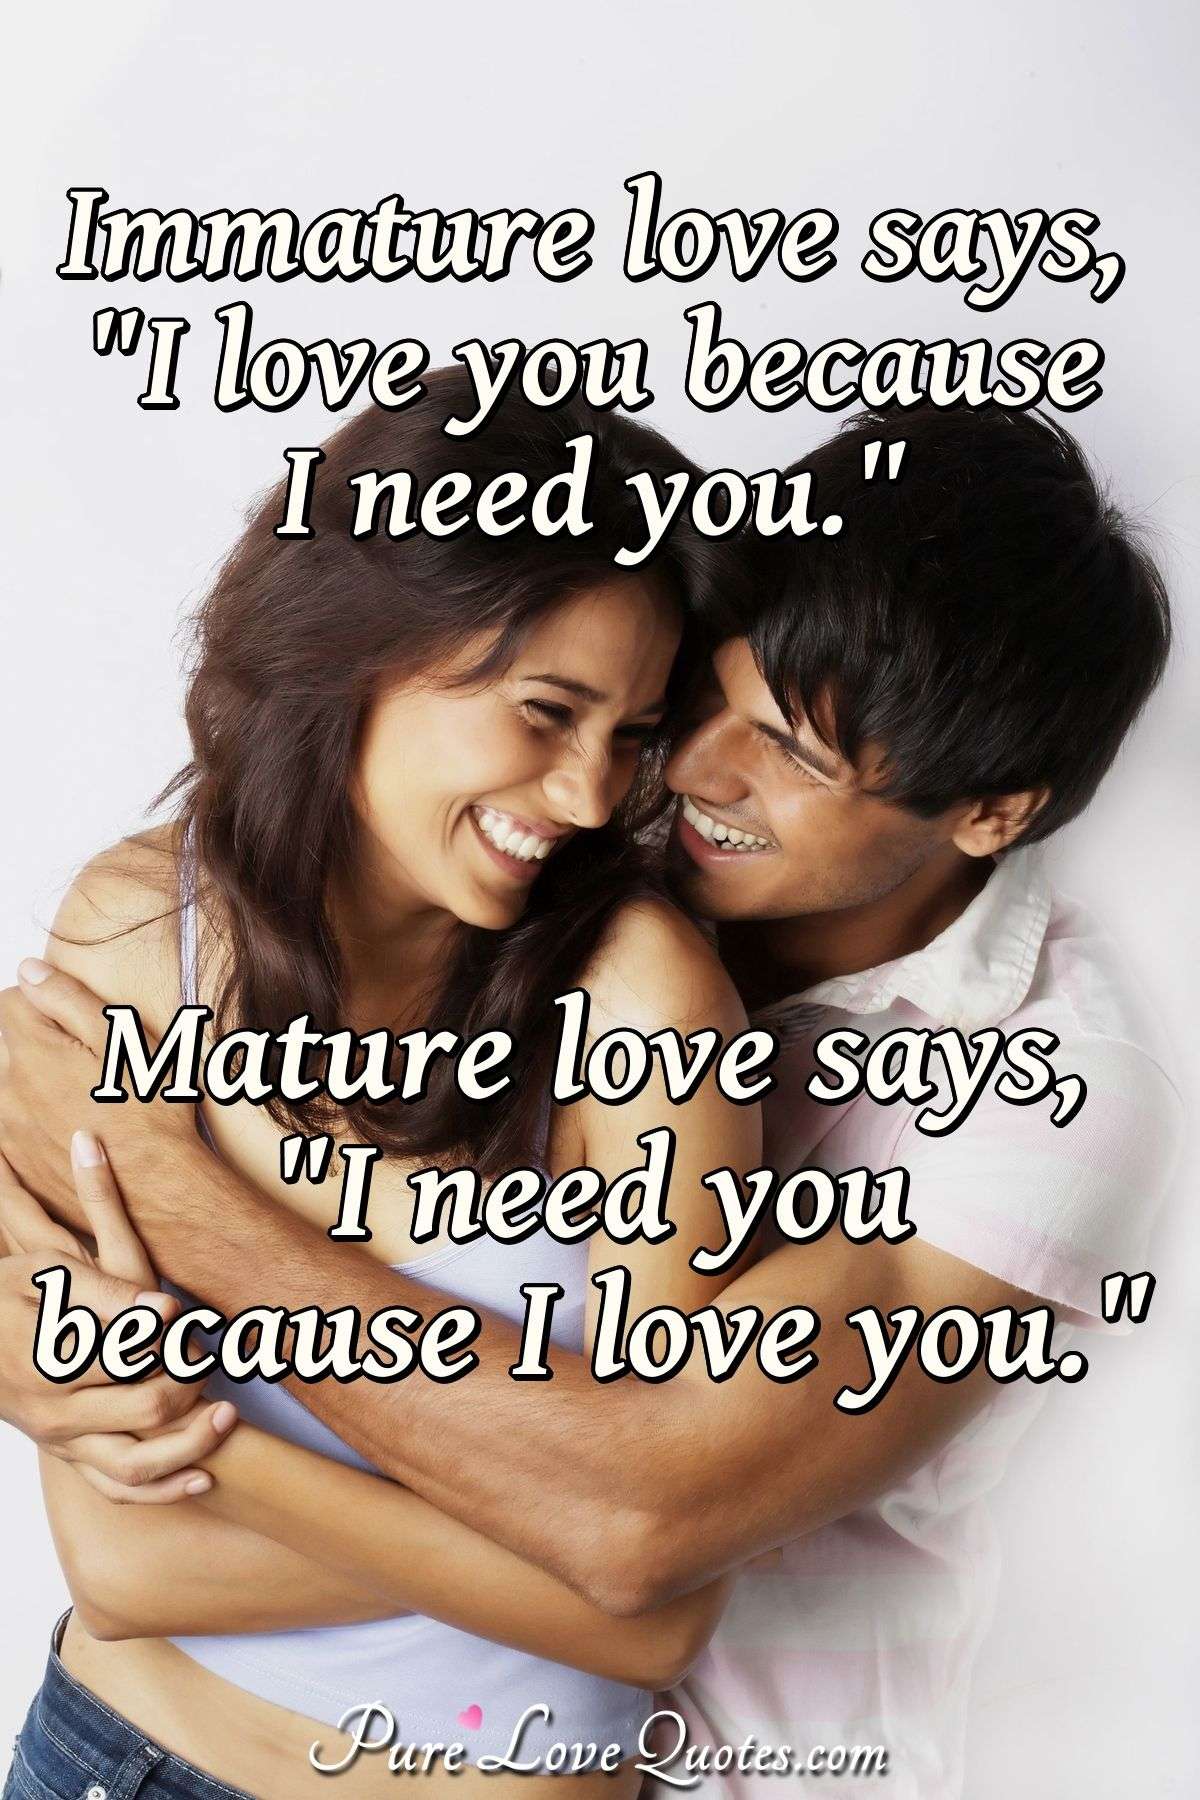 Immature love says, "I love you because I need you." Mature love says, "I need you because I love you."